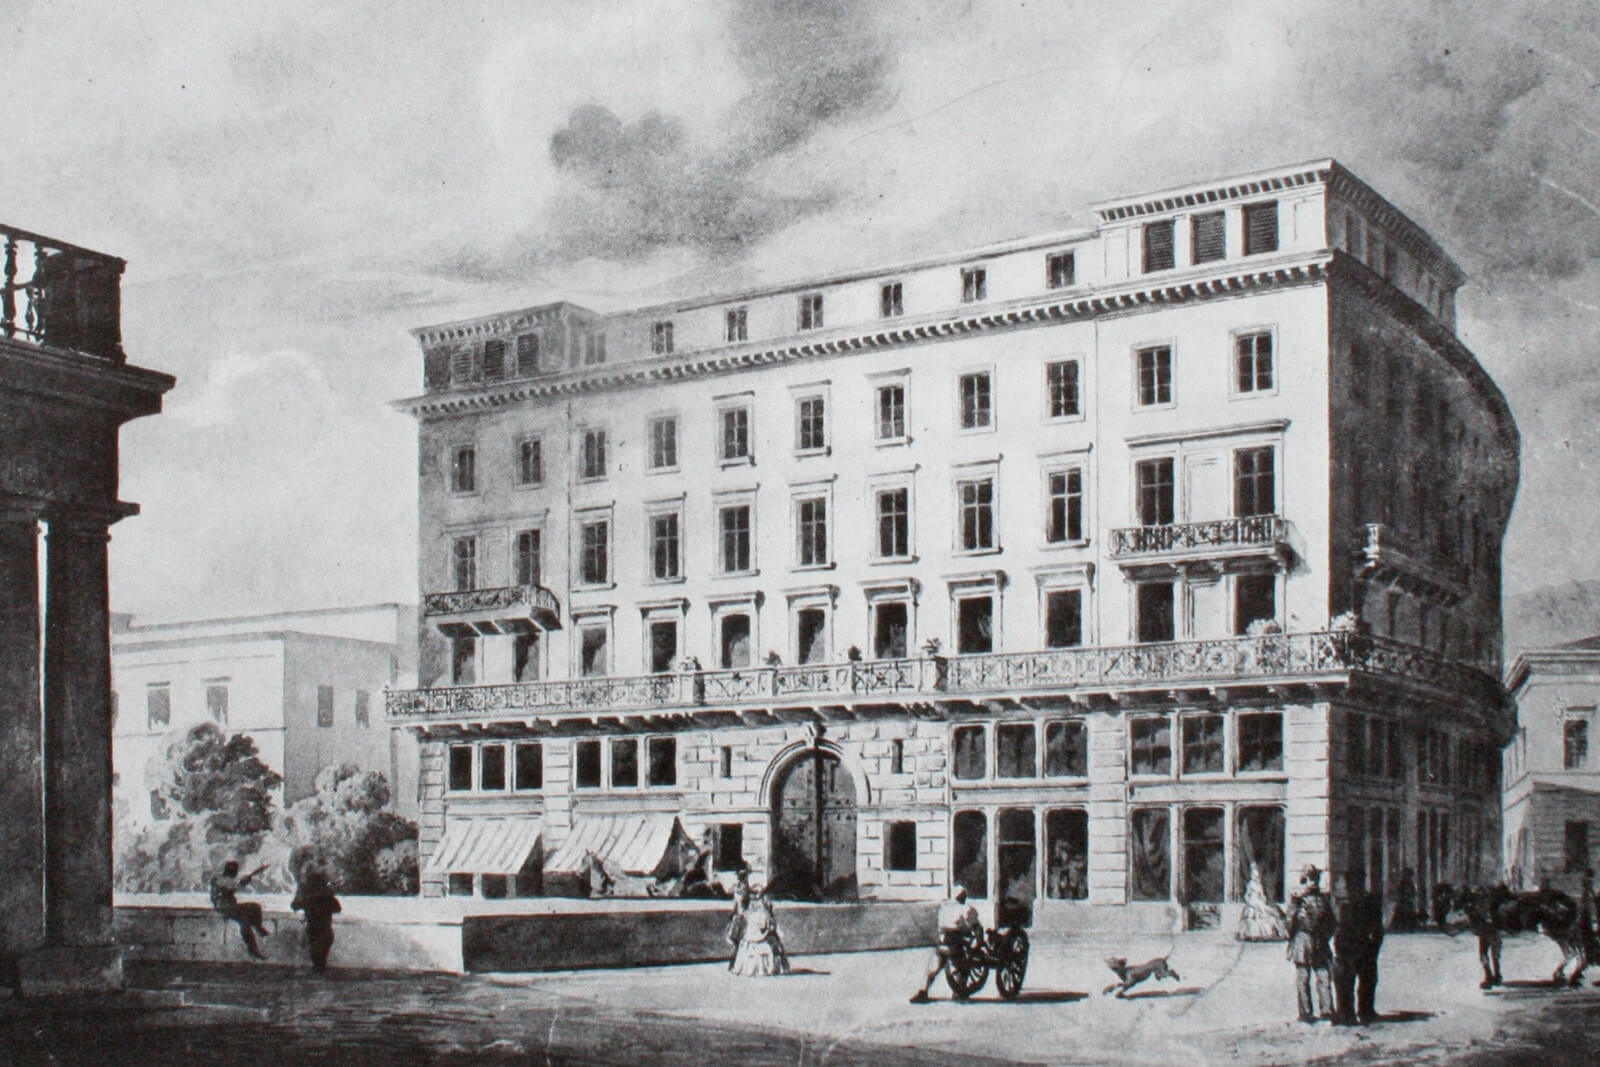 Sprünglihaus at Paradeplatz in 1857